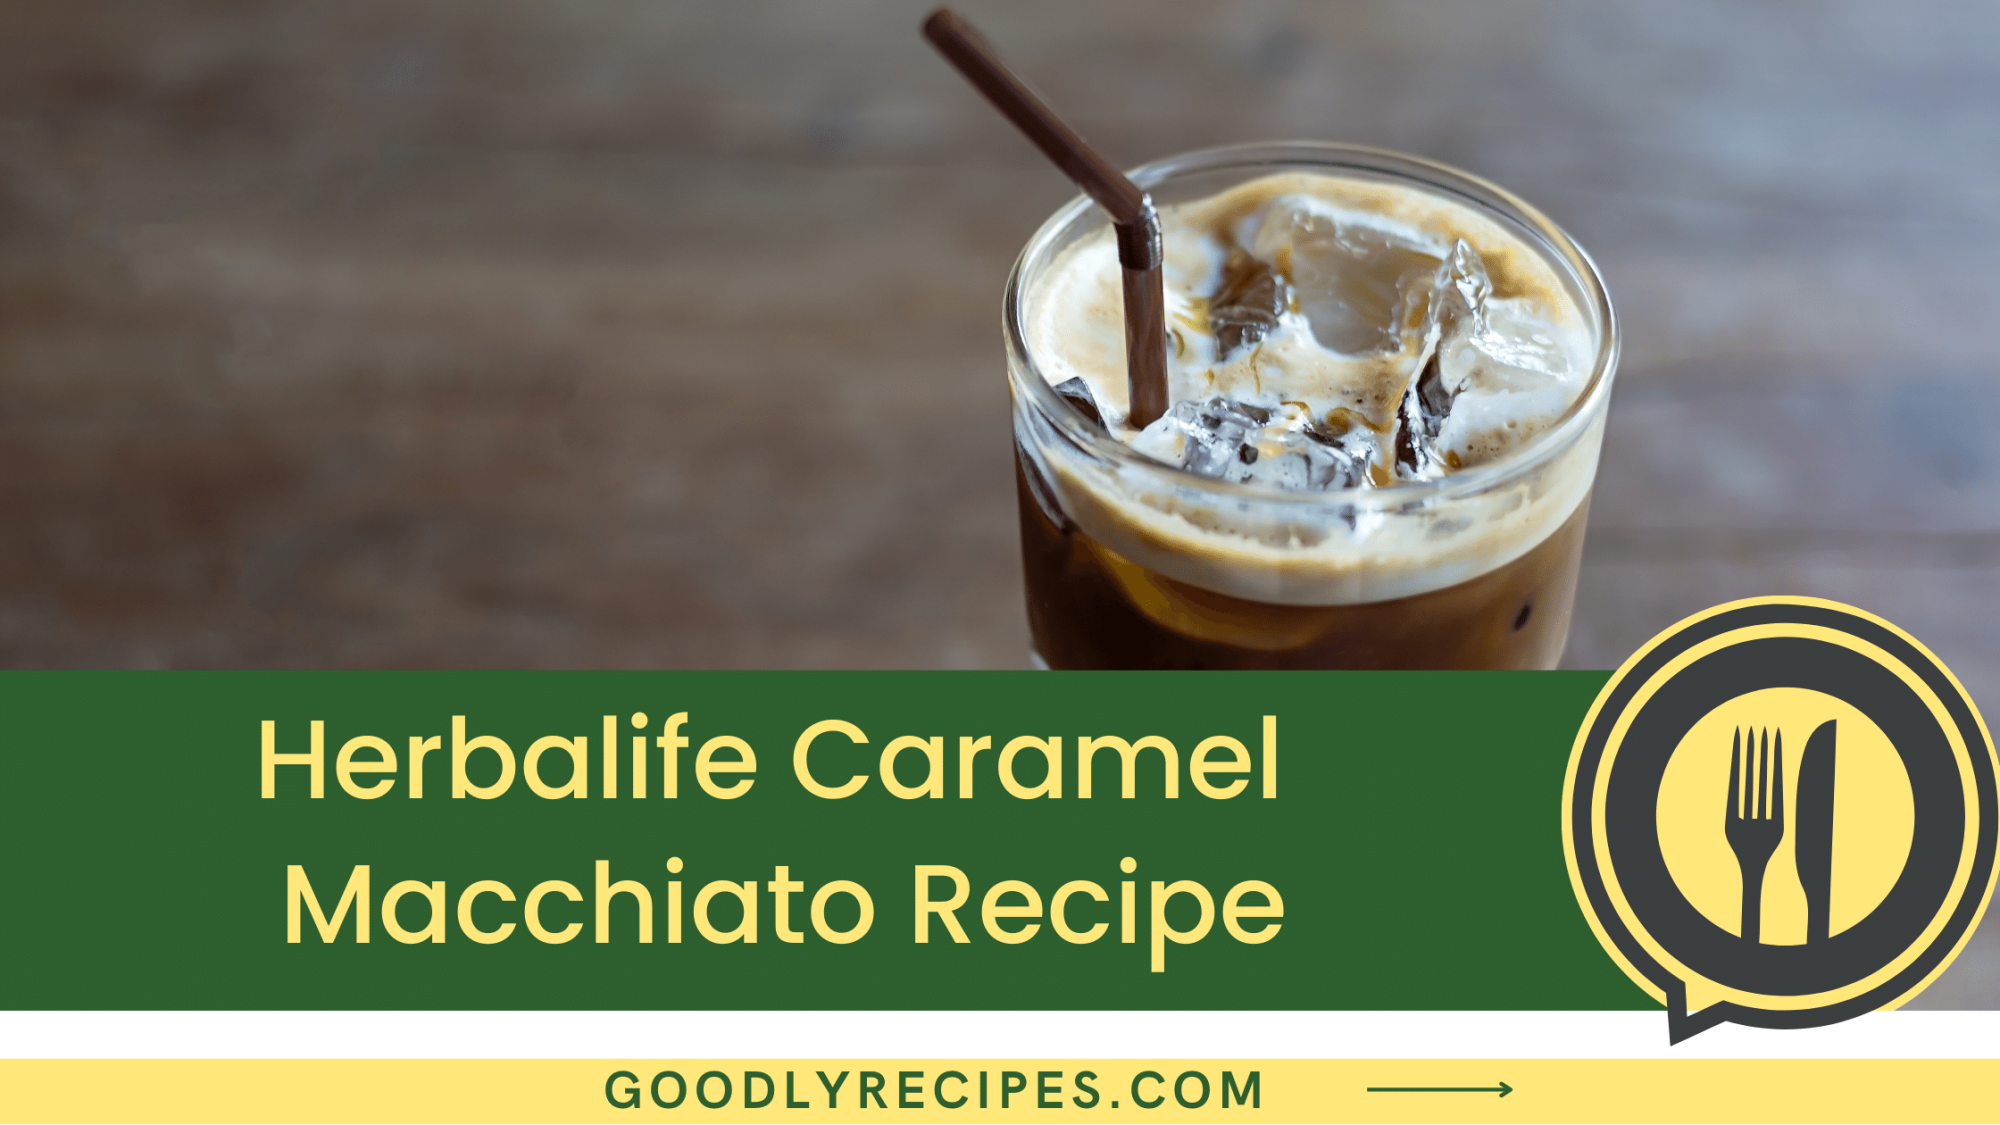 What is Herbalife Caramel Macchiato?